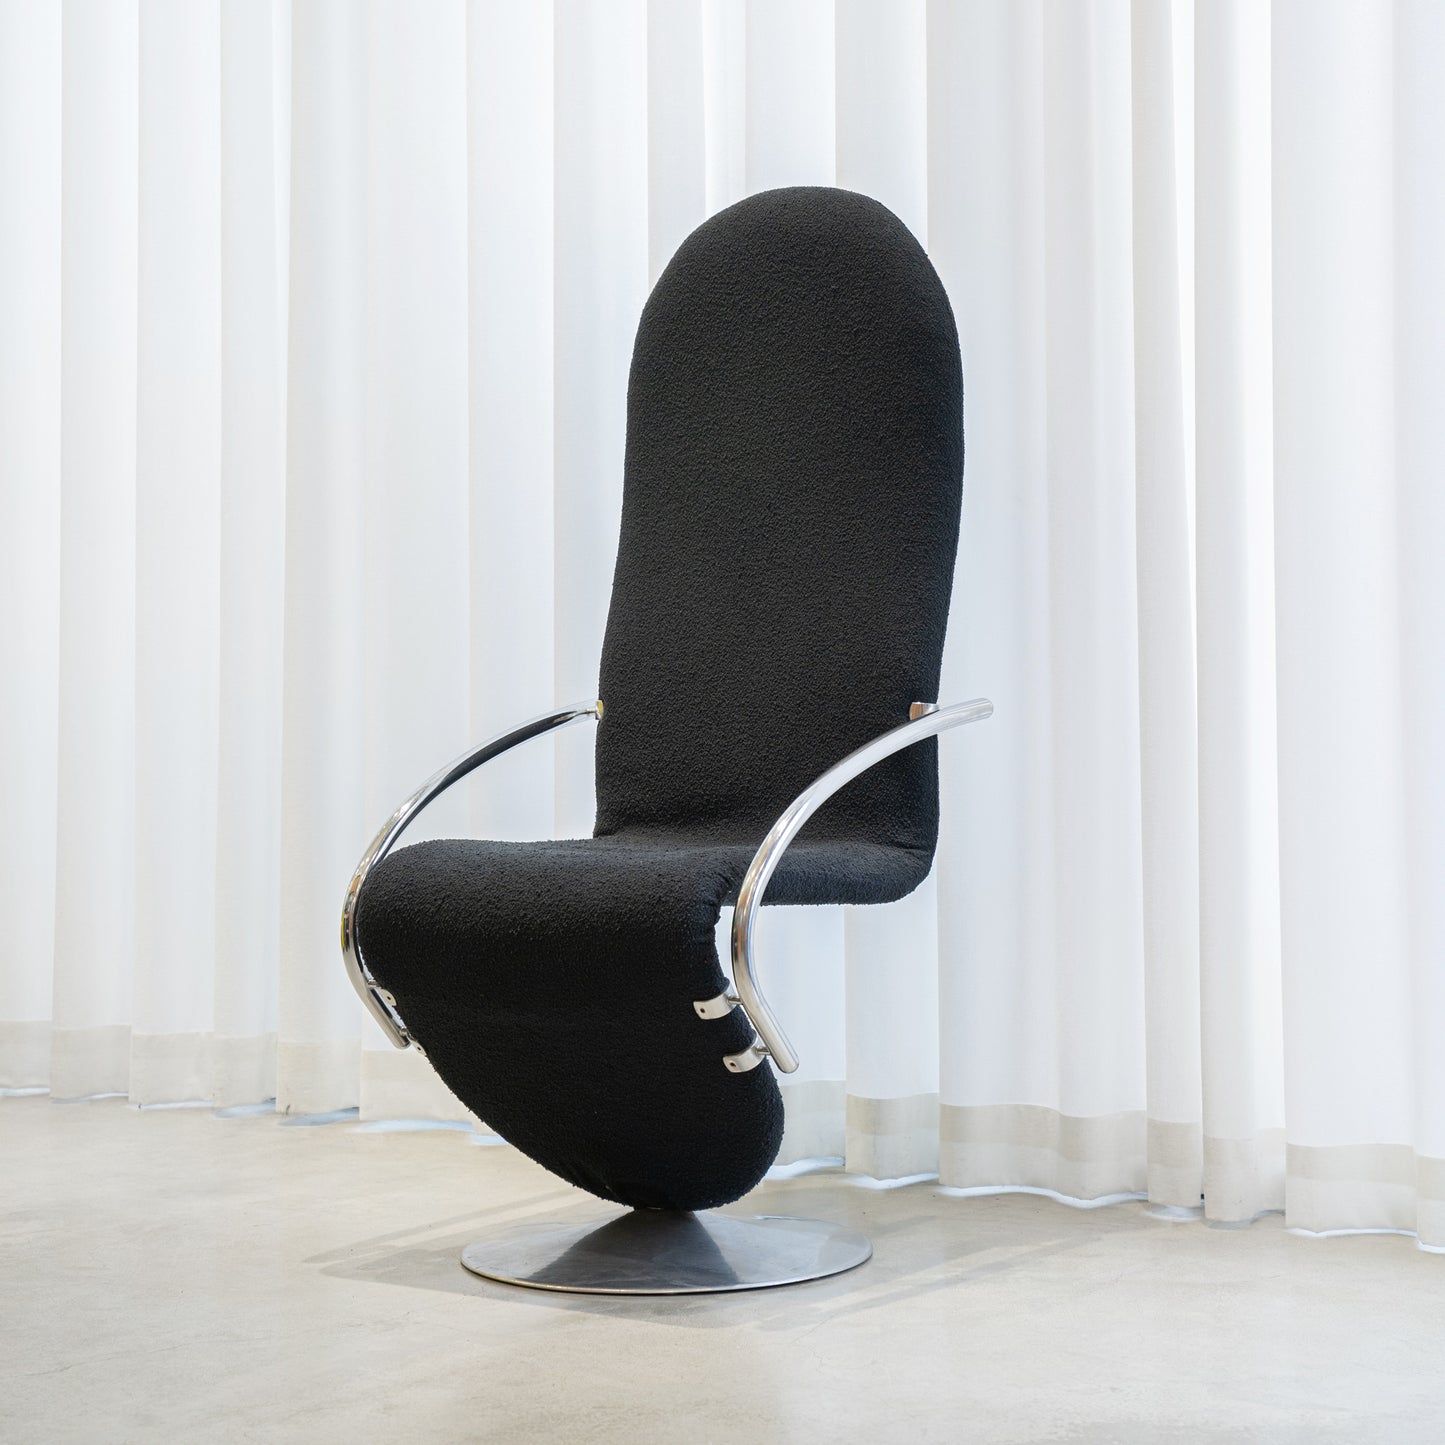 [LOT24] 123 Chair by Verner Panton